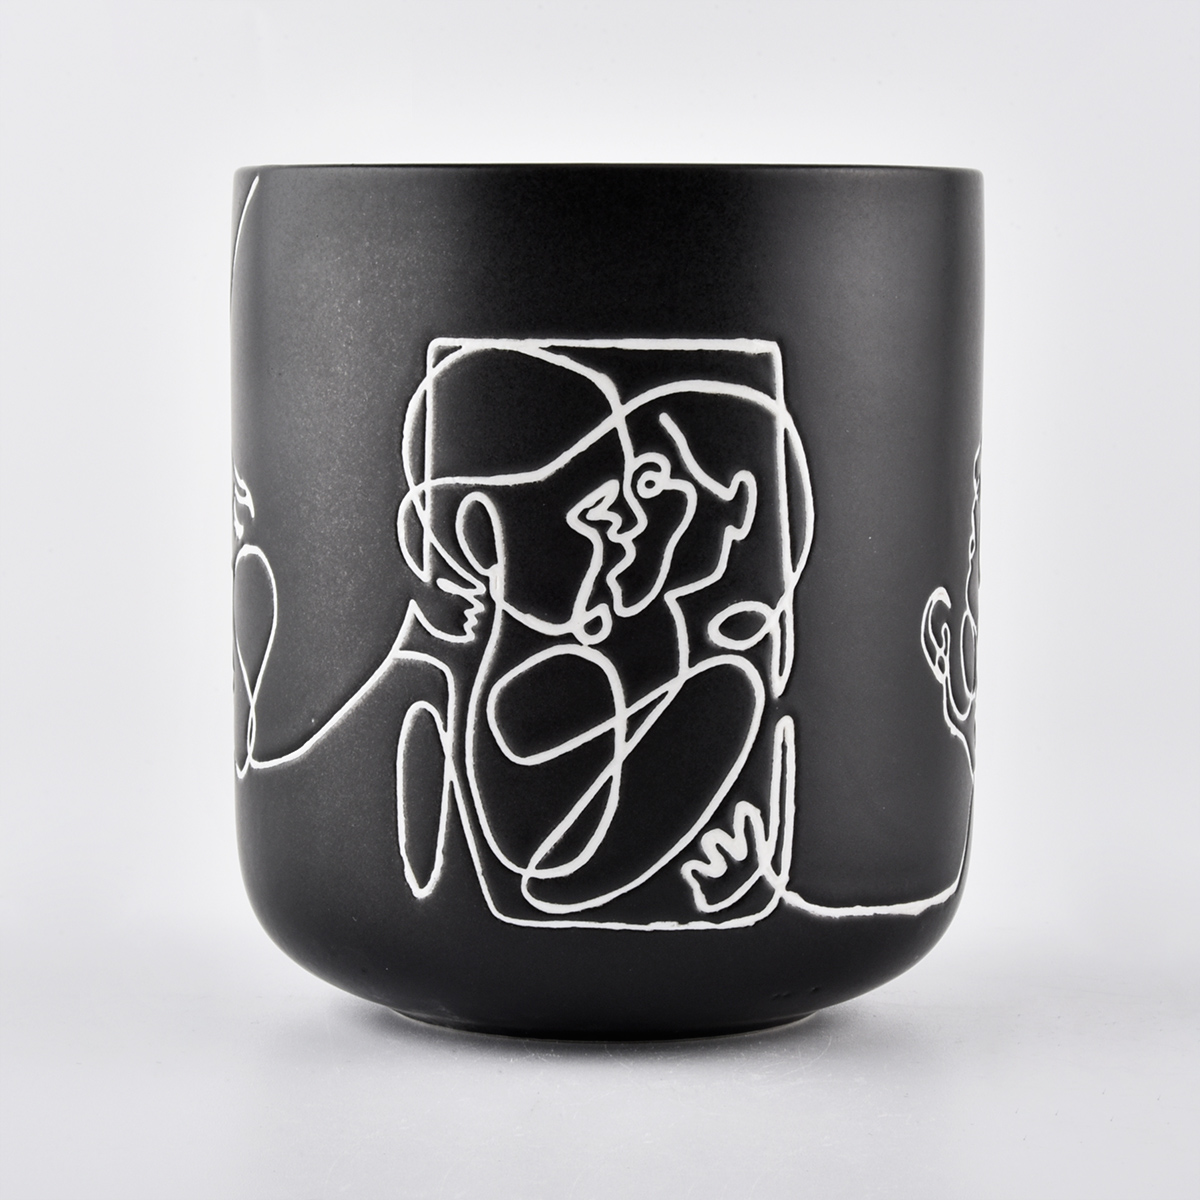 10oz black ceramic candle jar with sketch artwork